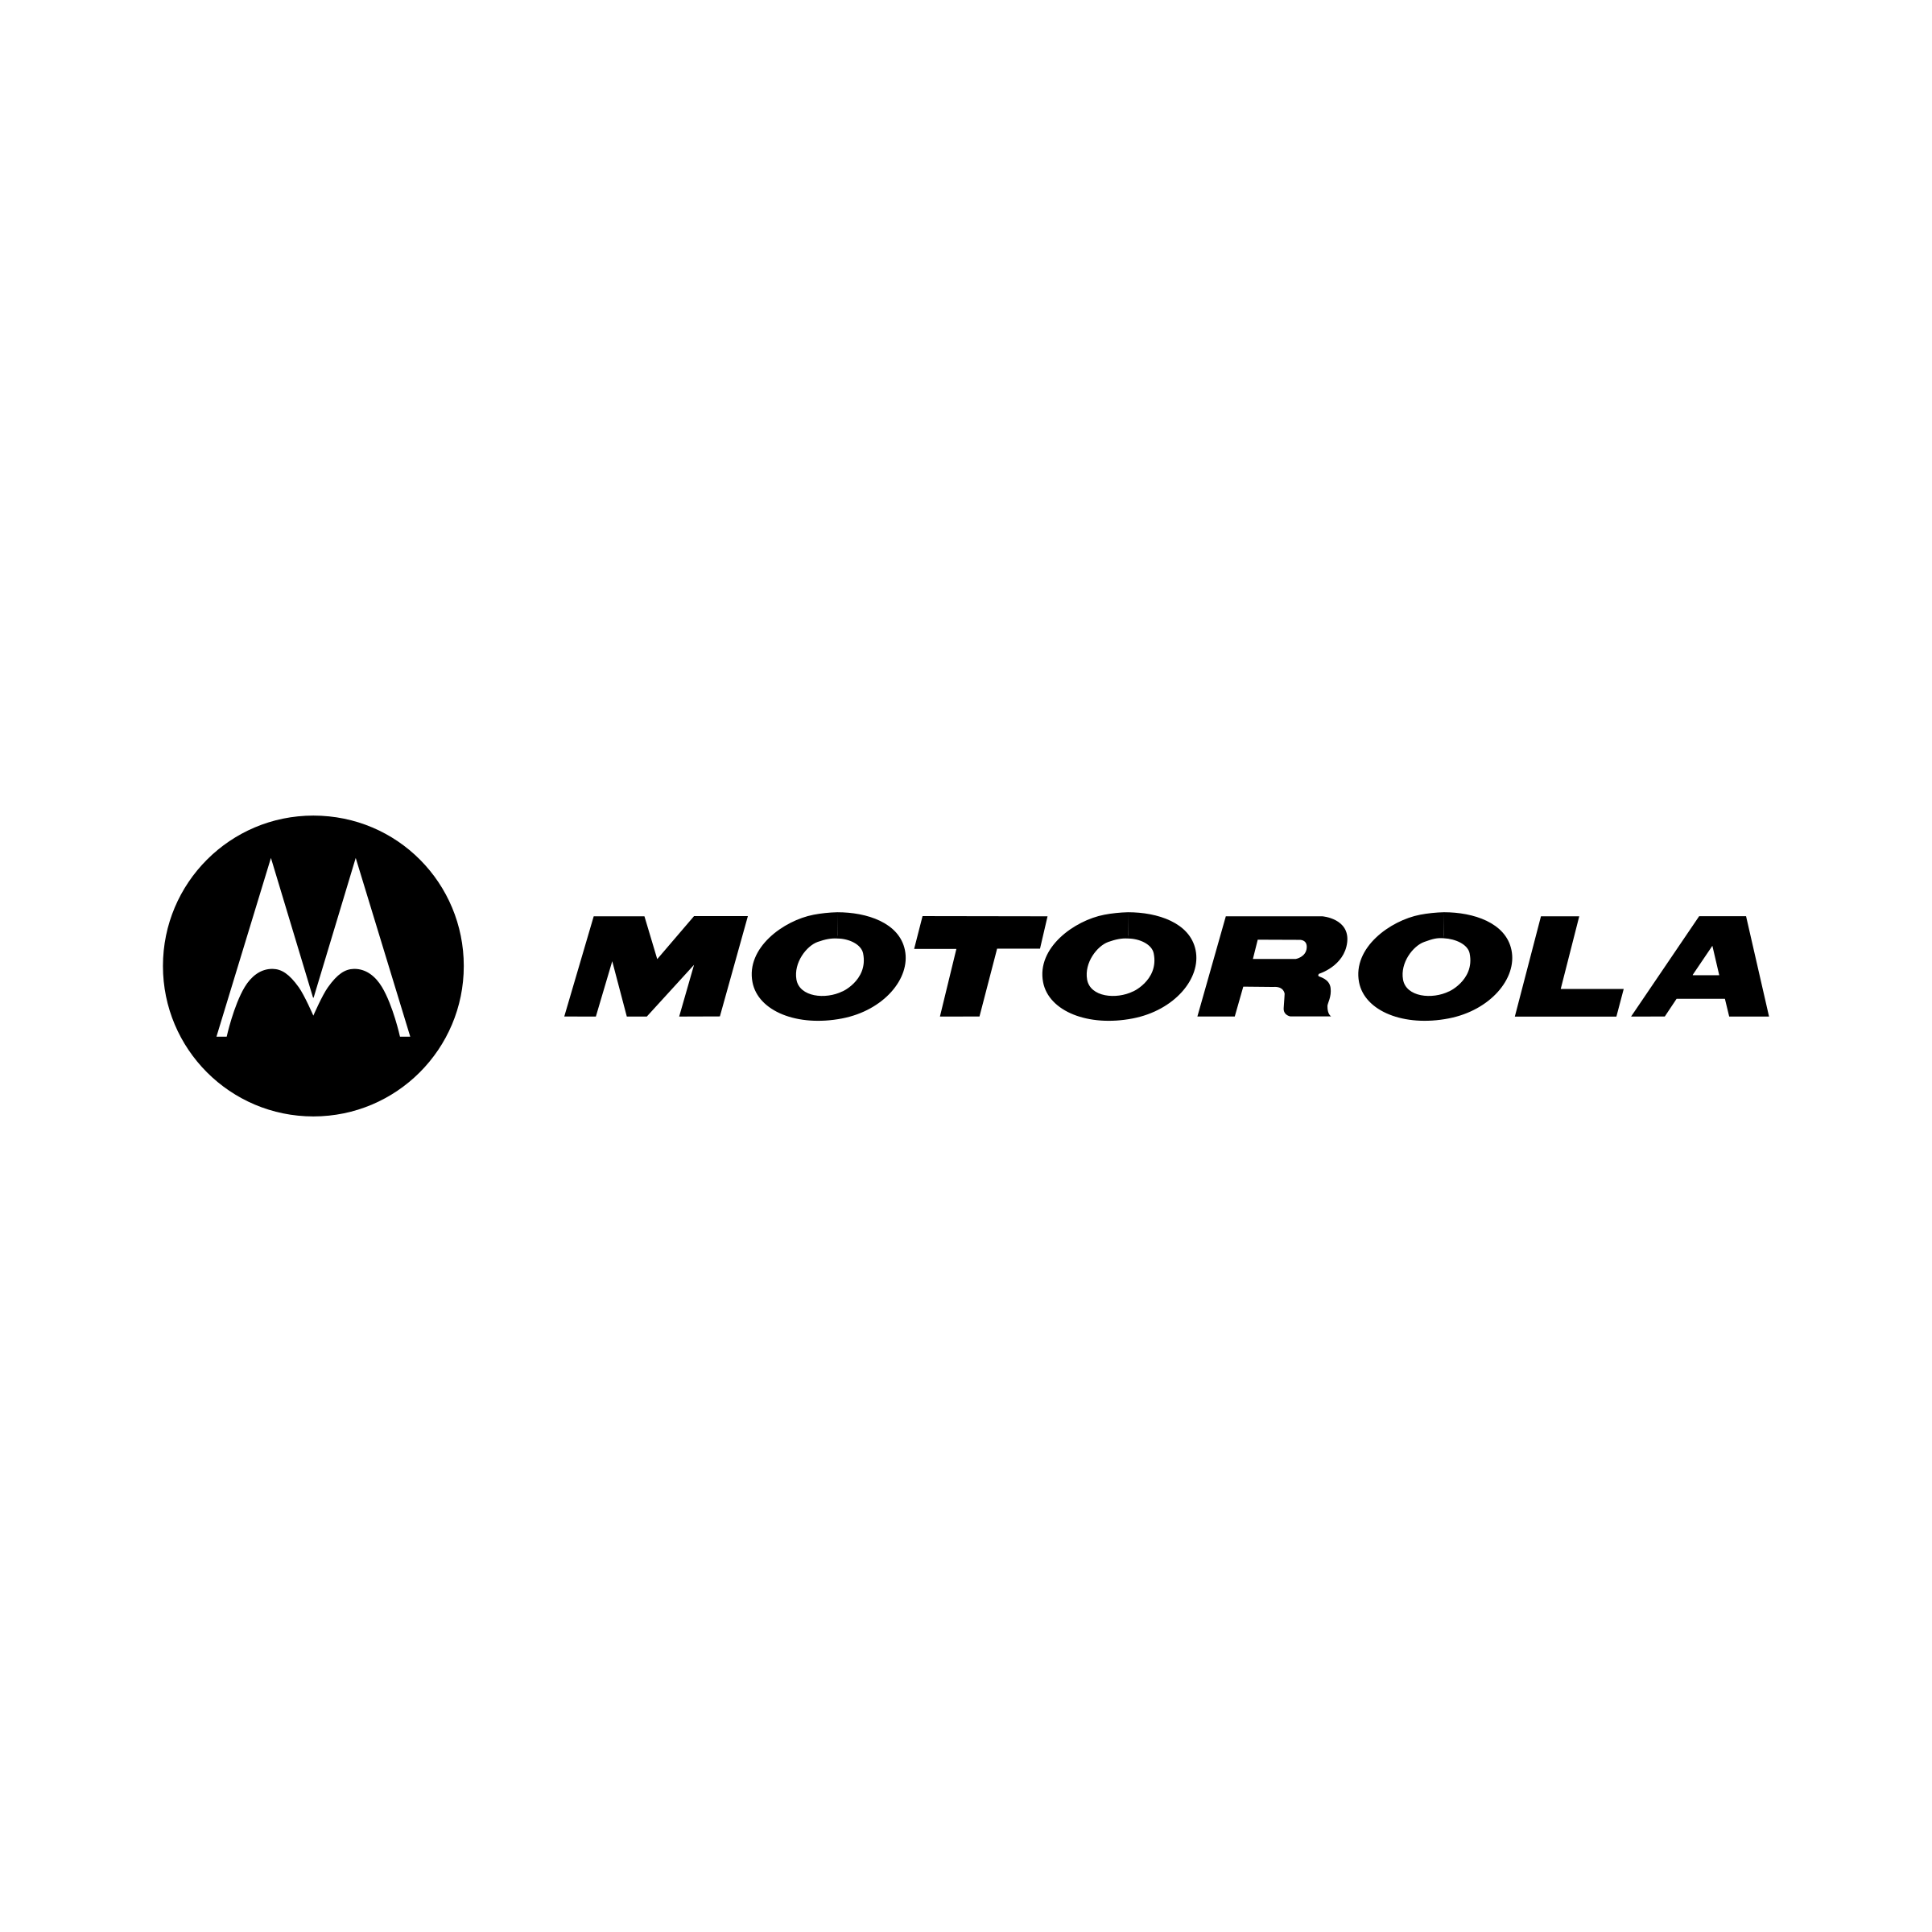 Motorola Logo - Motorola Logo PNG Transparent & SVG Vector